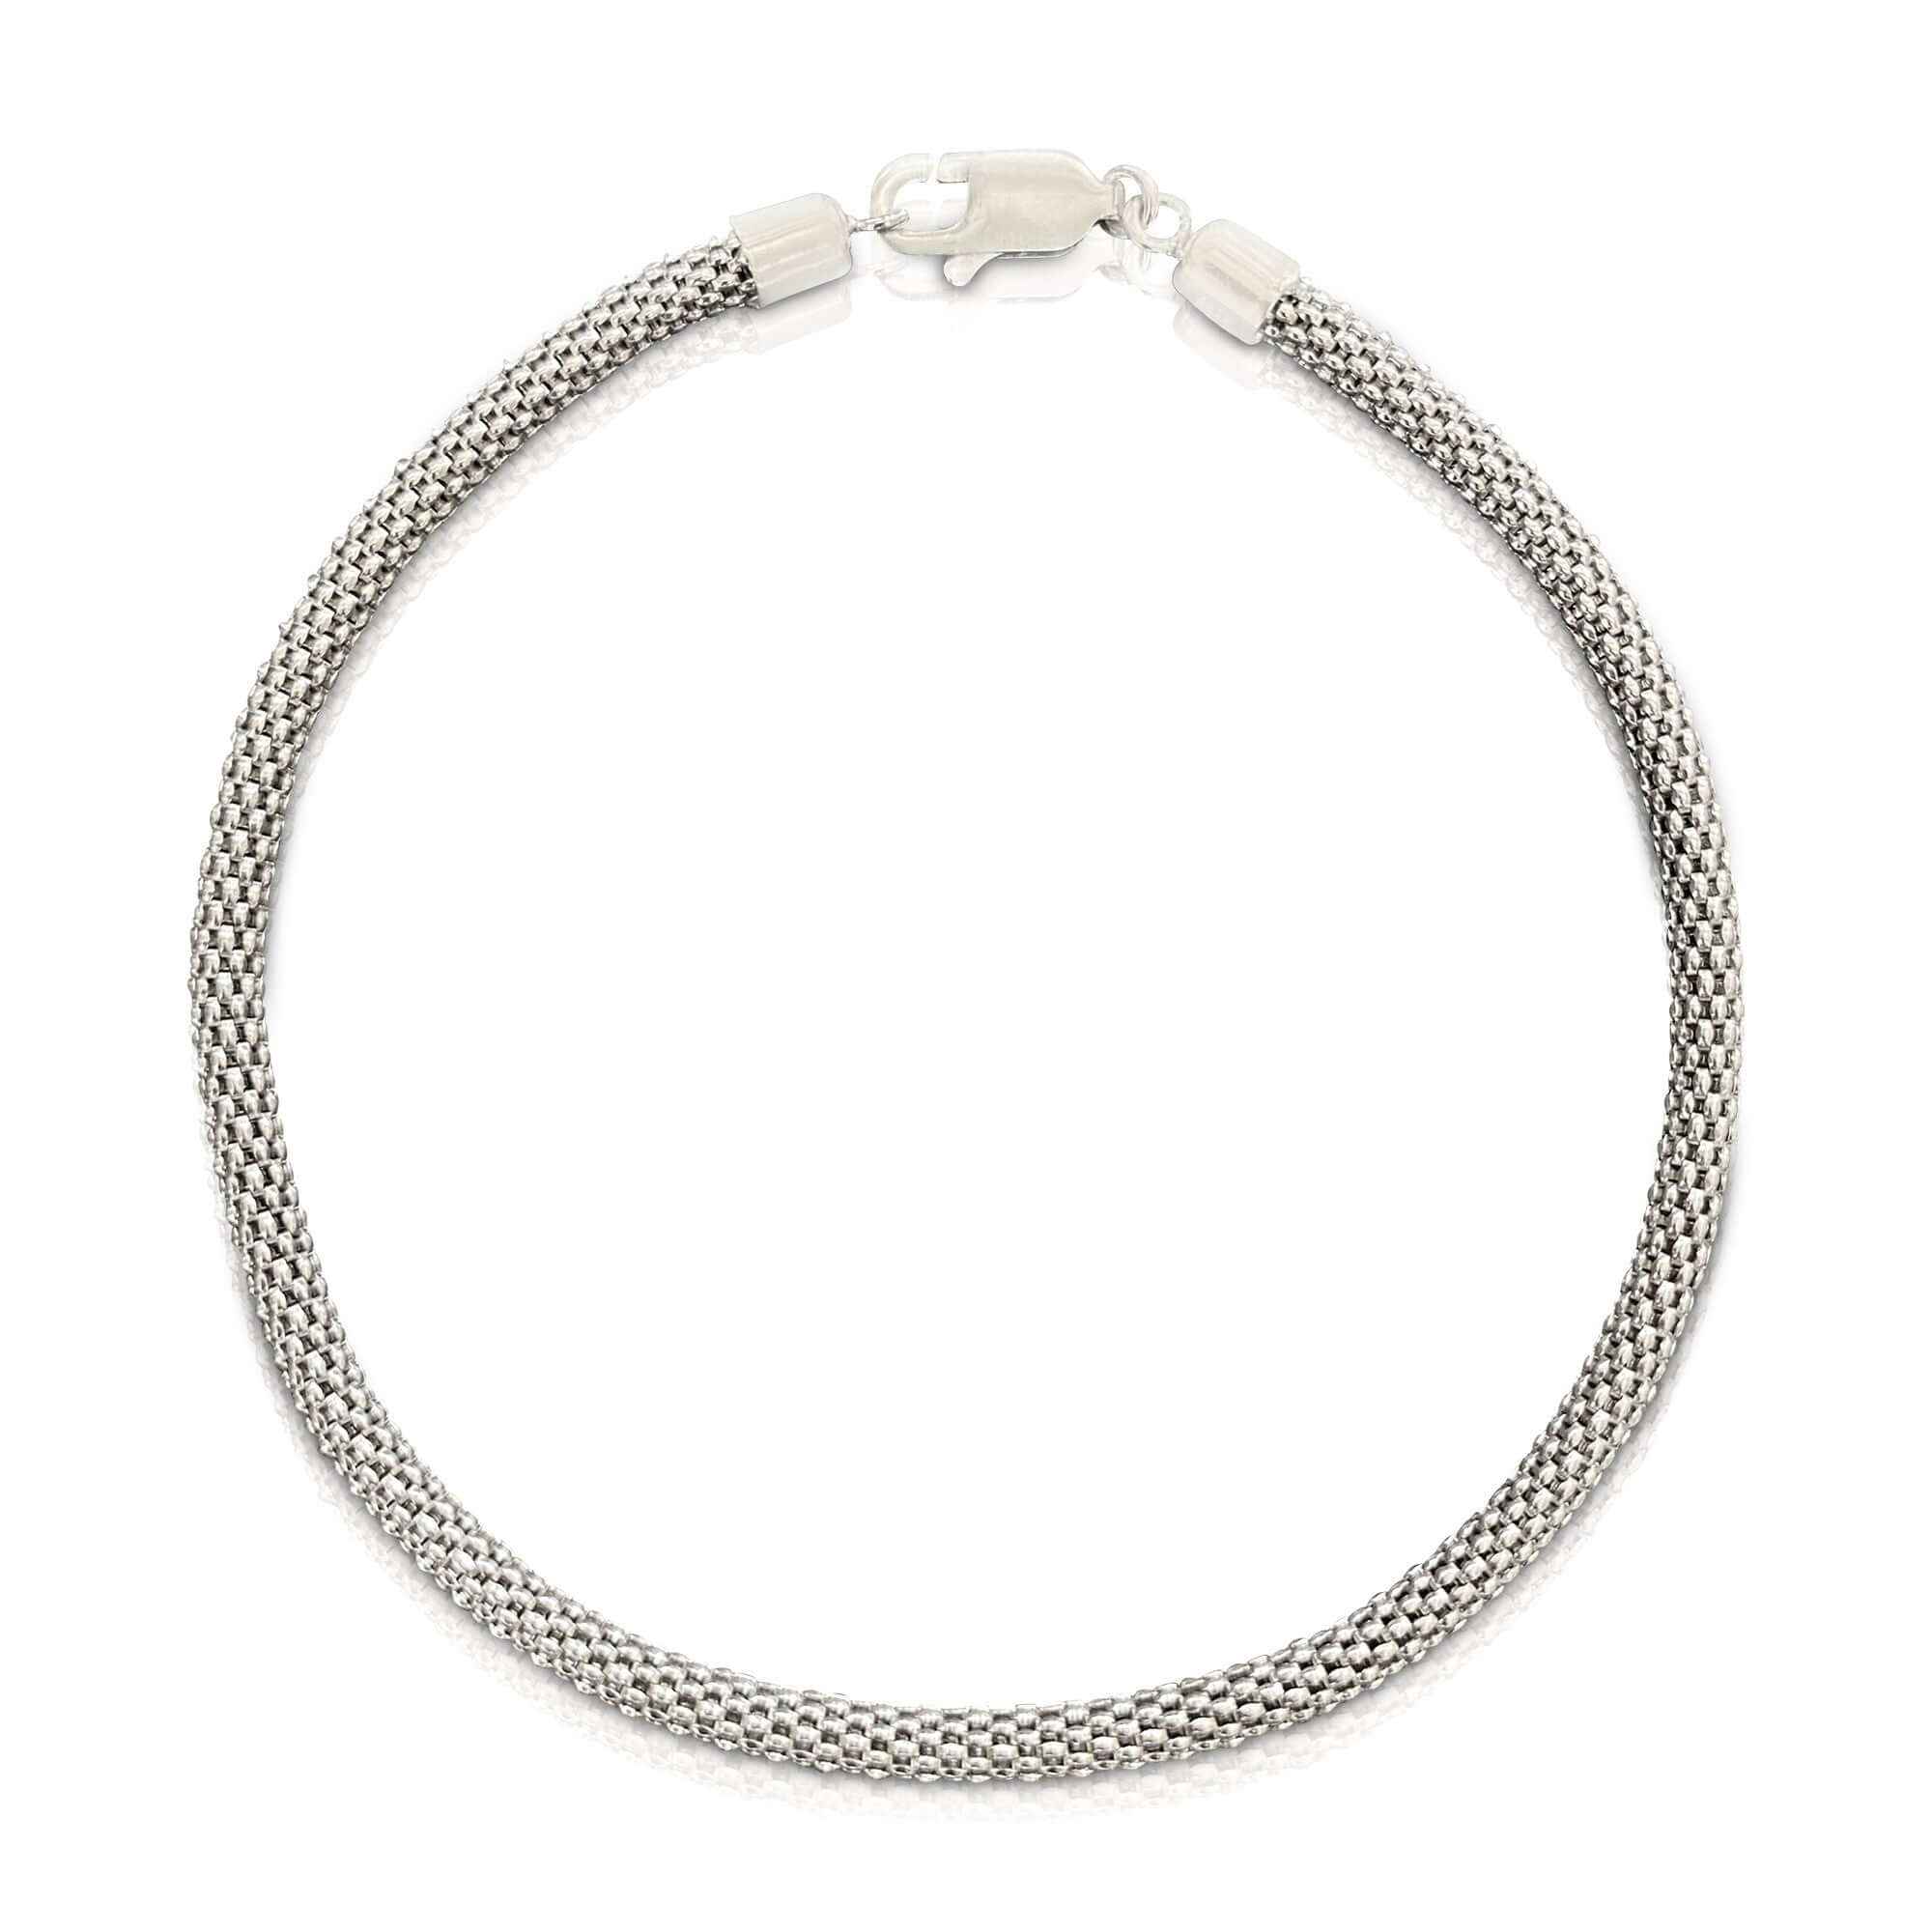 Elegant 925 sterling silver rope bracelet for women by Alessandra James.